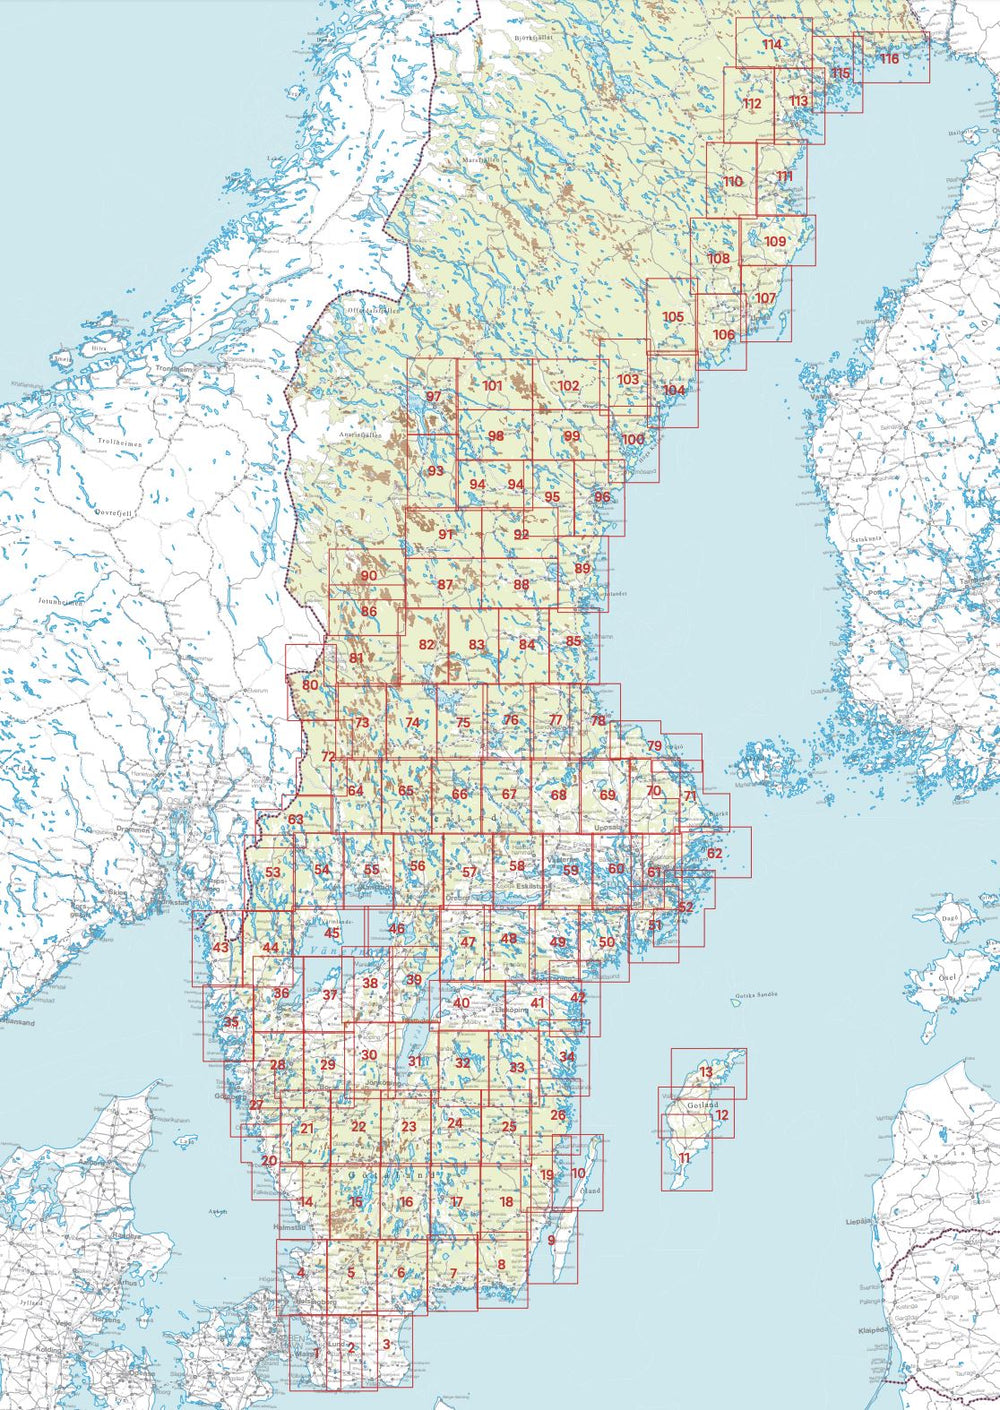 Carte topographique n° 32 - Tranås (Suède) | Norstedts - Sverigeserien carte pliée Norstedts 